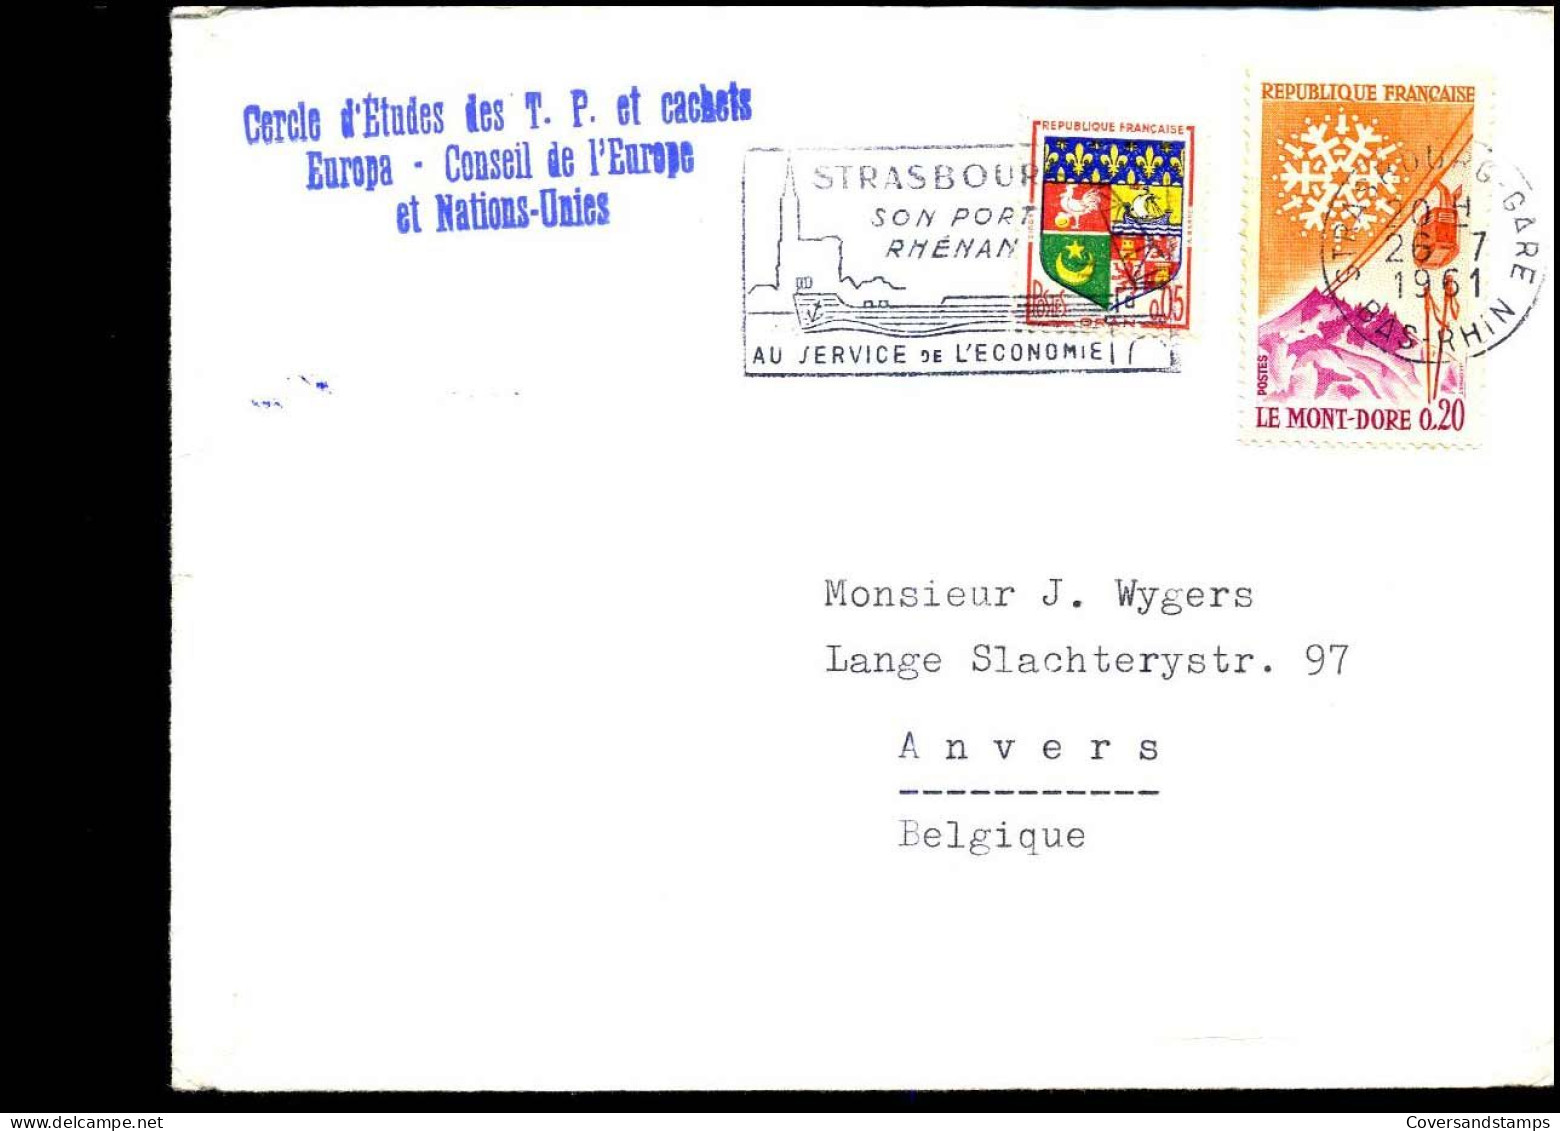 Cover To Antwerp, Belgium - Covers & Documents